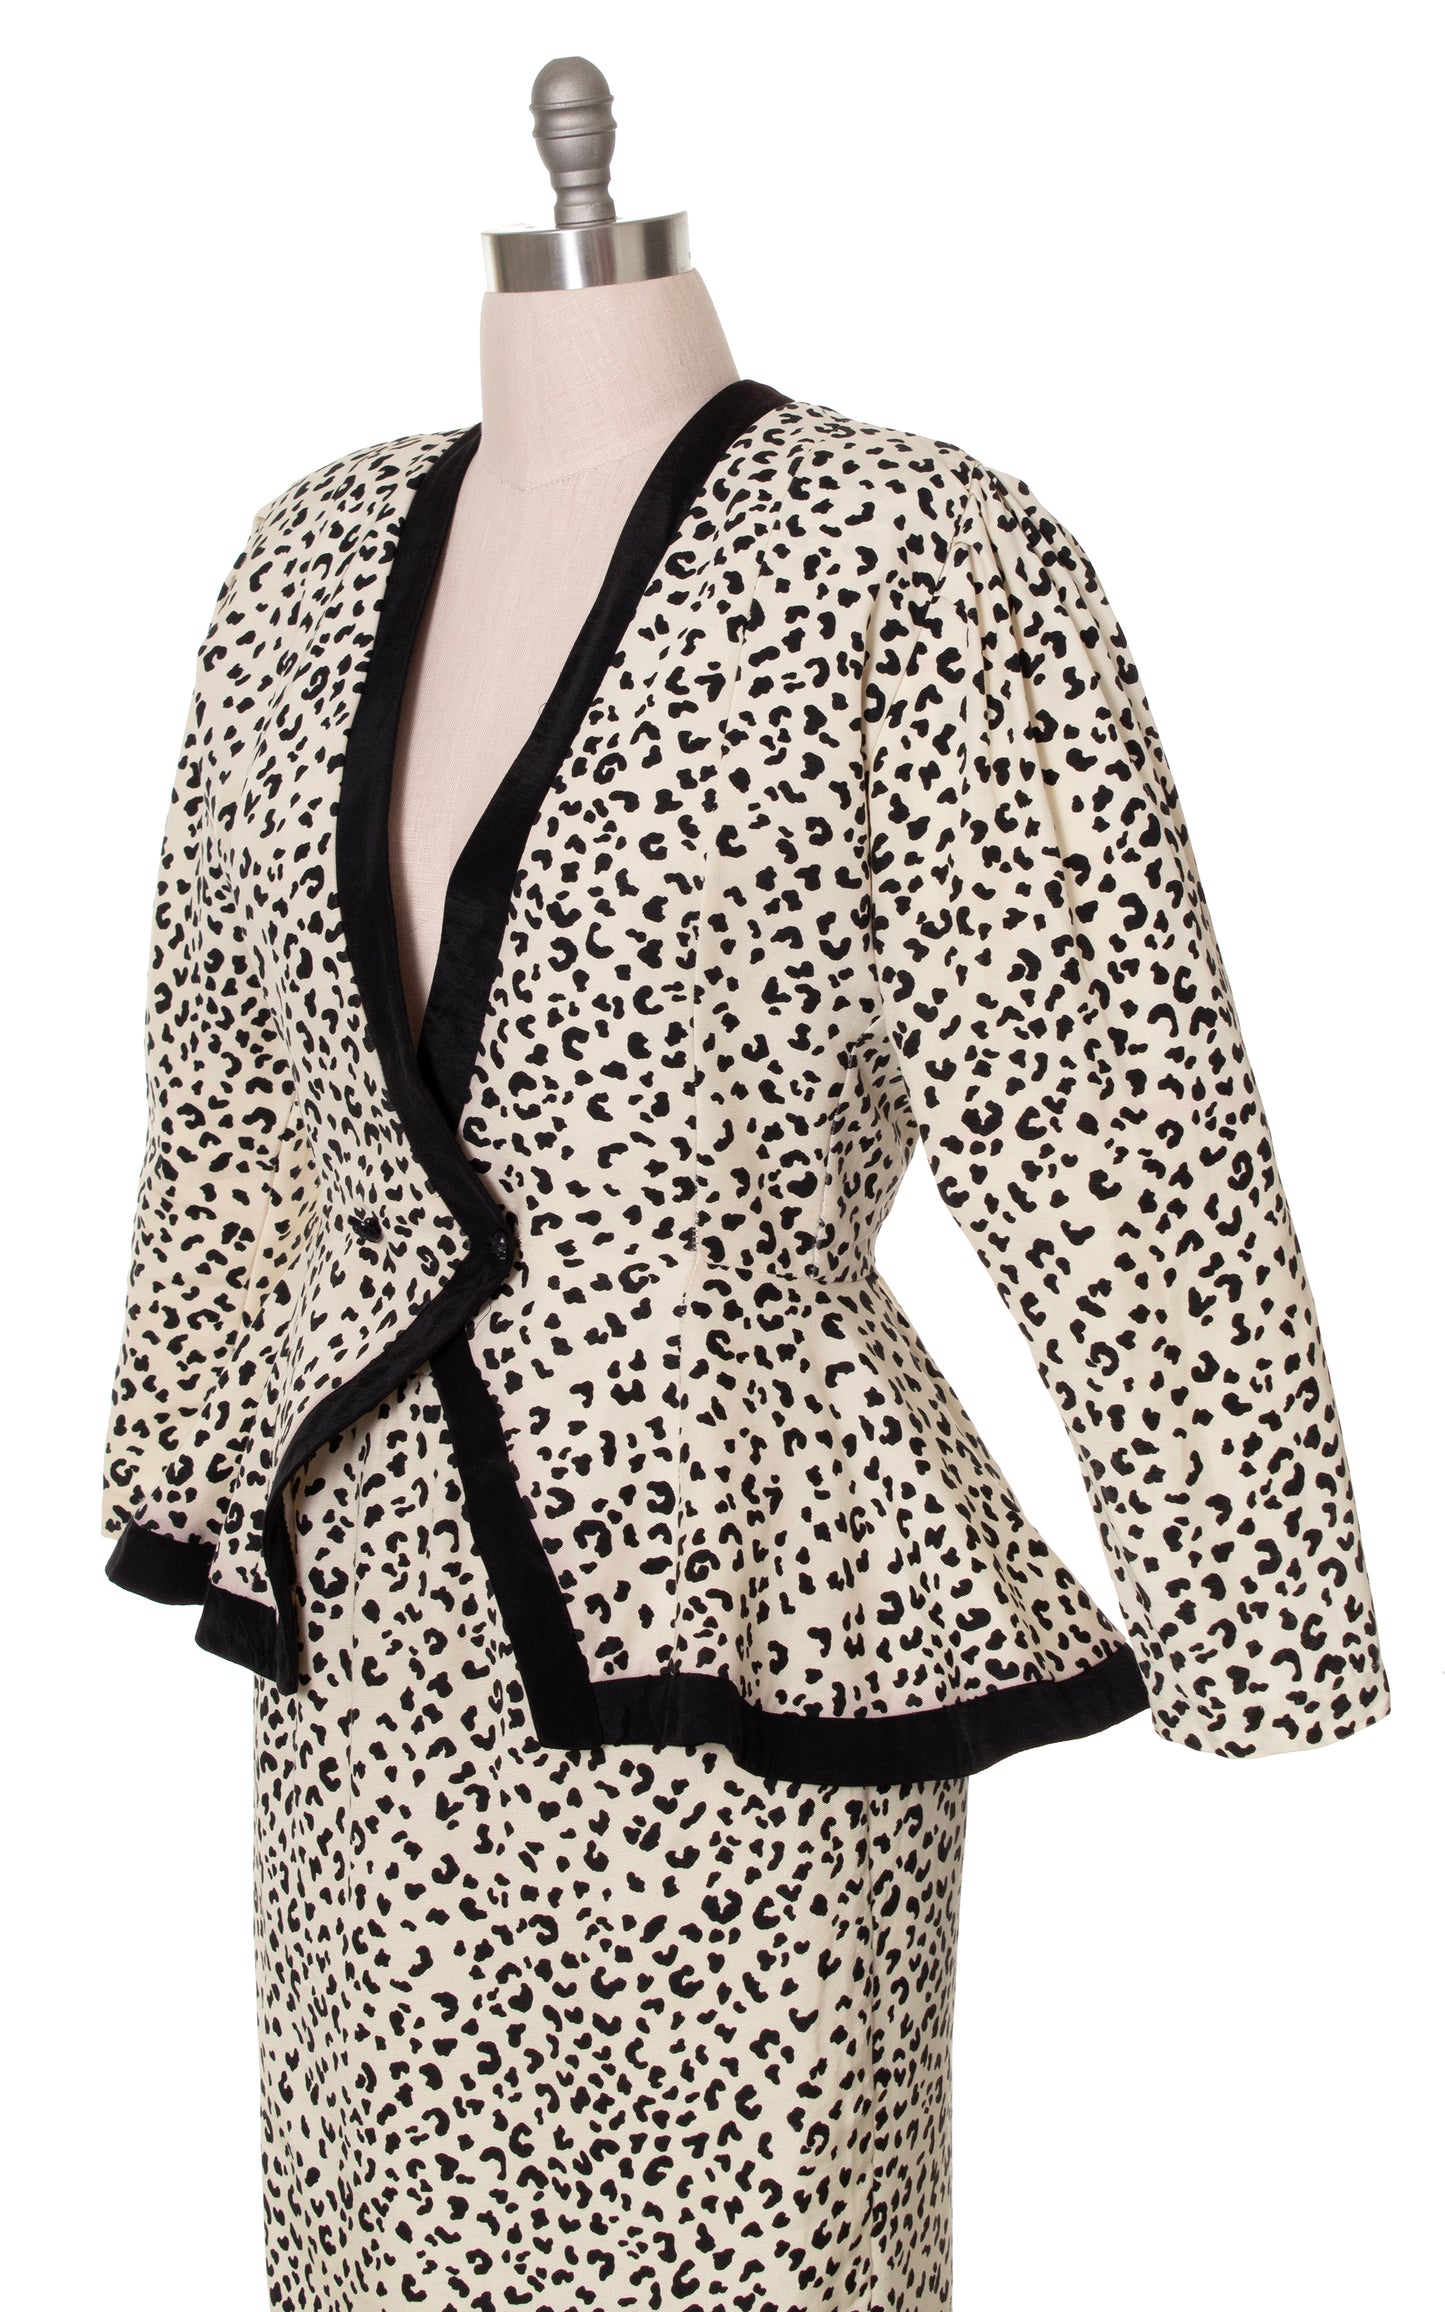 1980s Leopard Print Peplum Skirt Suit | x-large